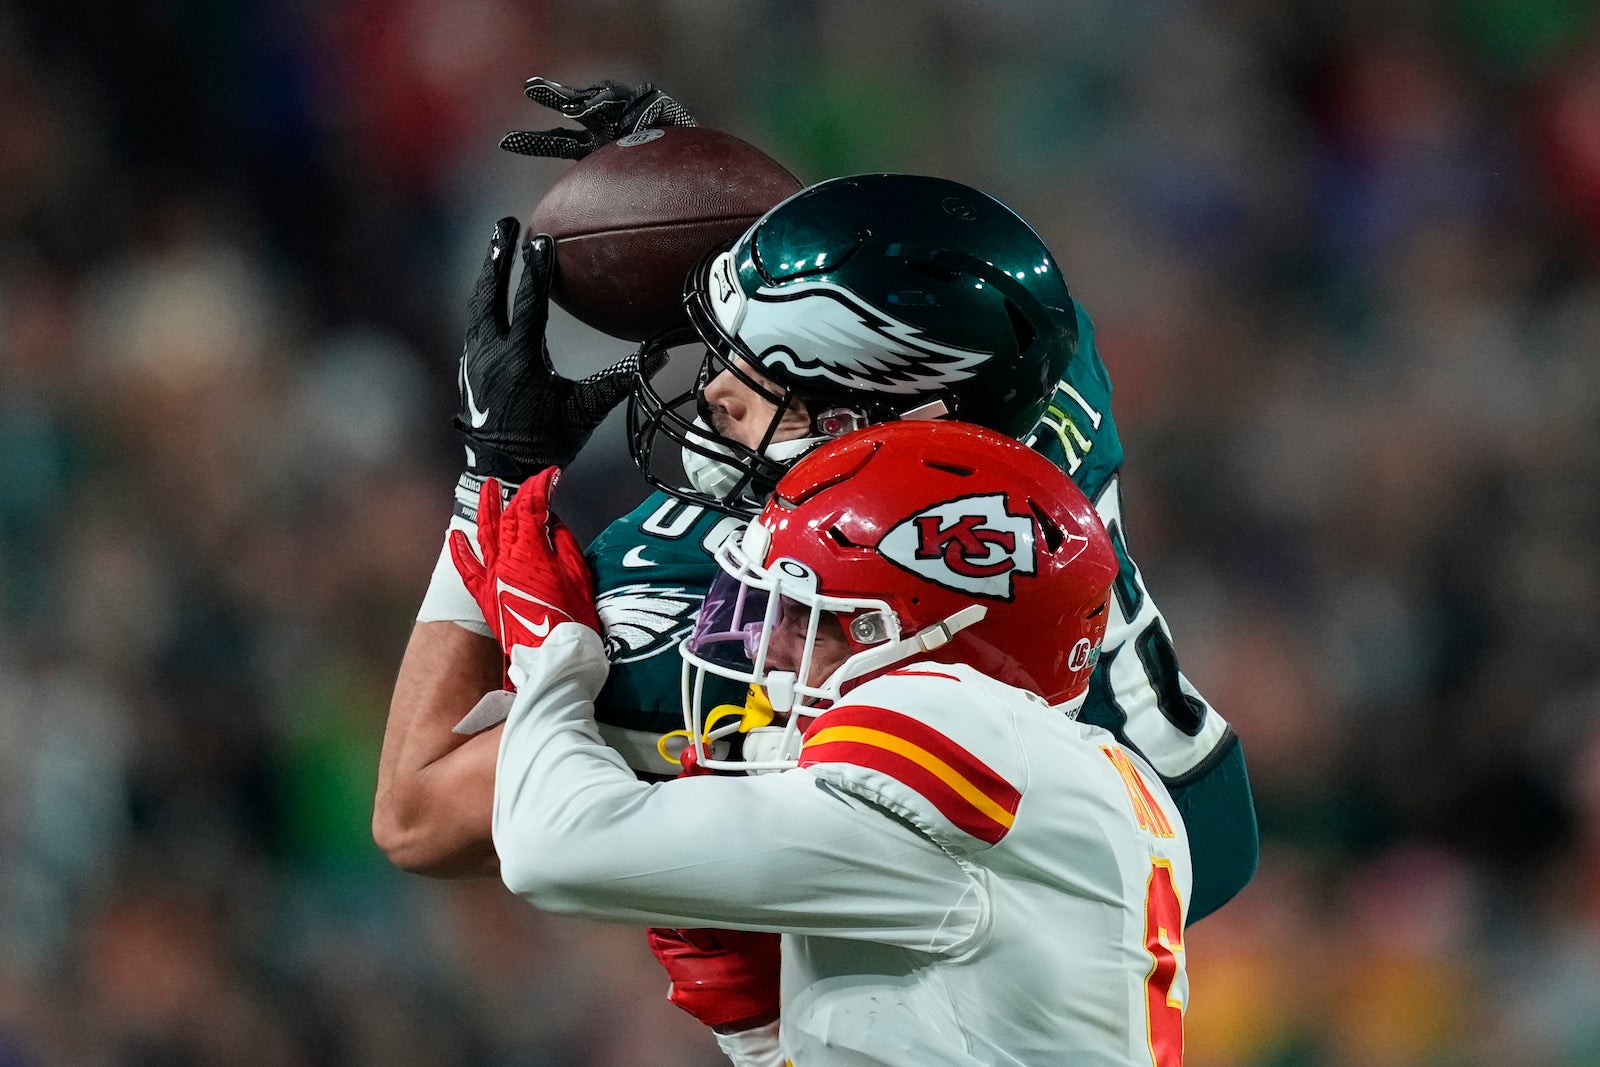 Super Bowl LVII: How to watch, listen, stream Chiefs vs. Eagles